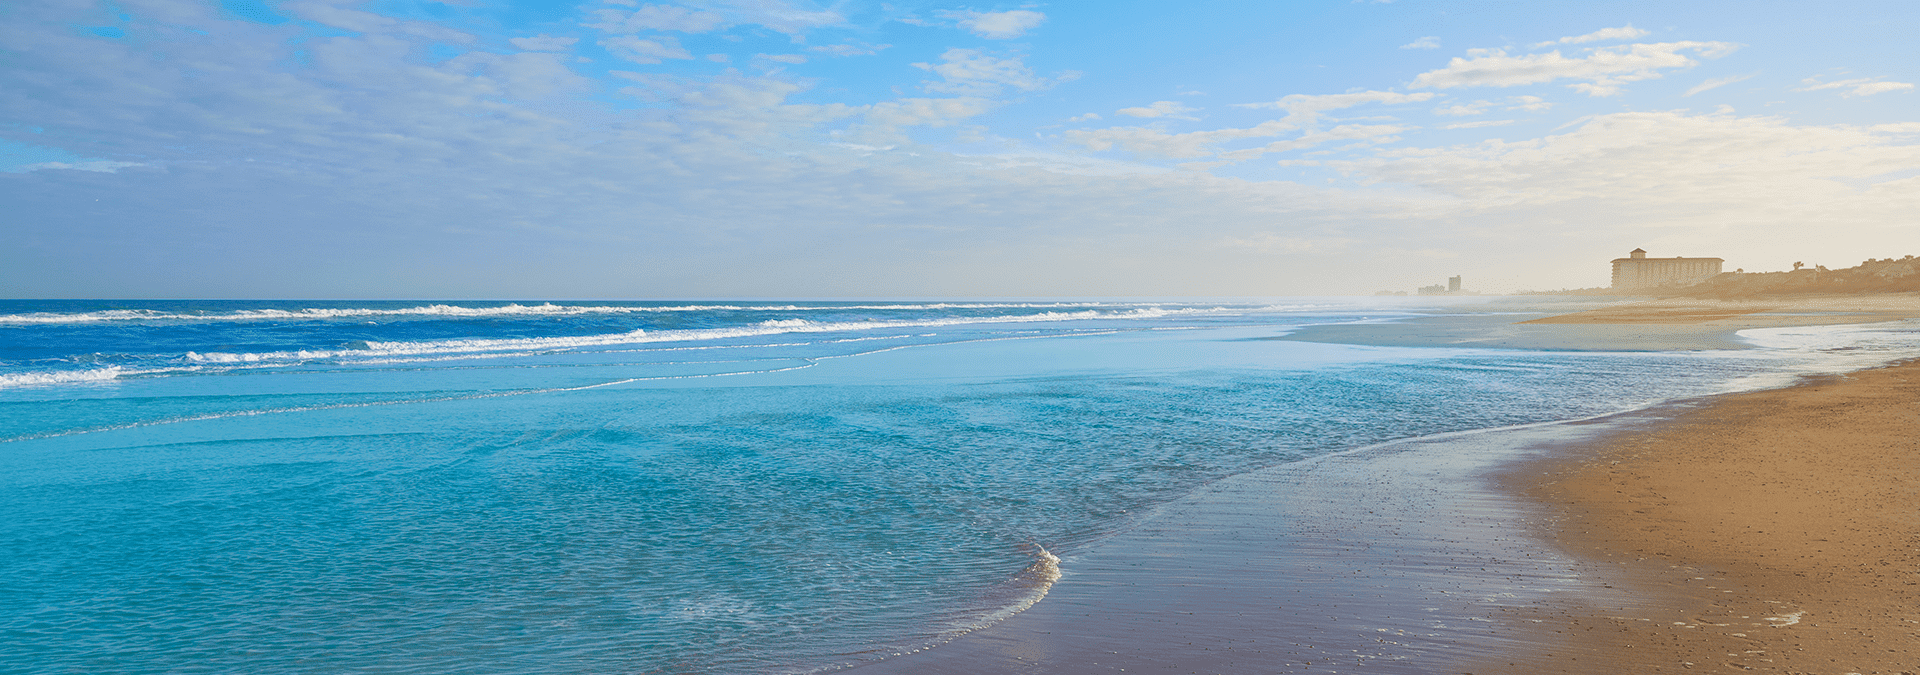 the shoreline of atlantic beach florida